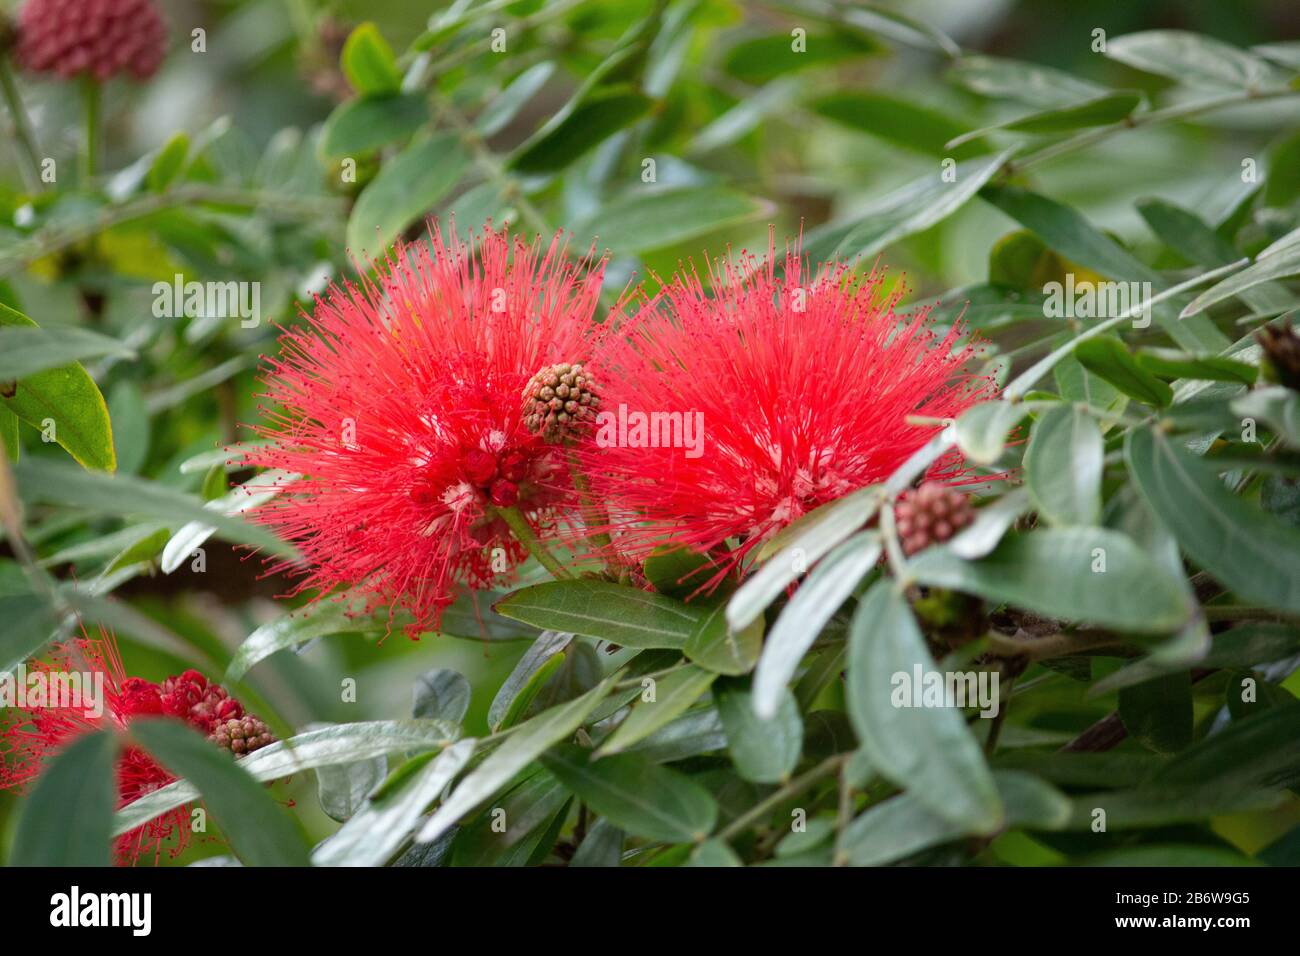 Red powderpuff calliandra flower blooms against green foliage Stock Photo